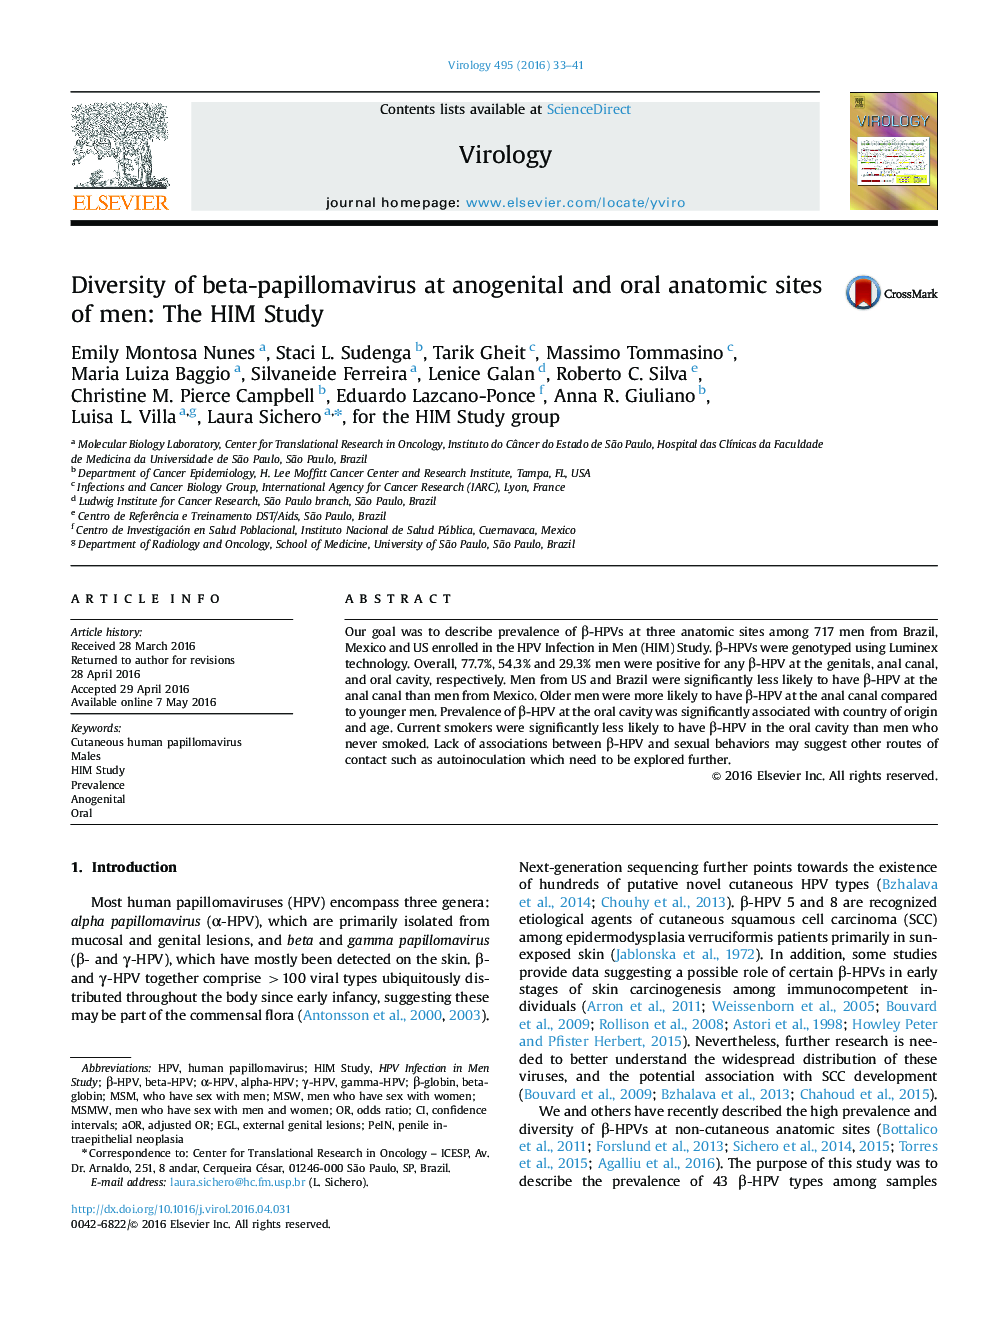 Diversity of beta-papillomavirus at anogenital and oral anatomic sites of men: The HIM Study